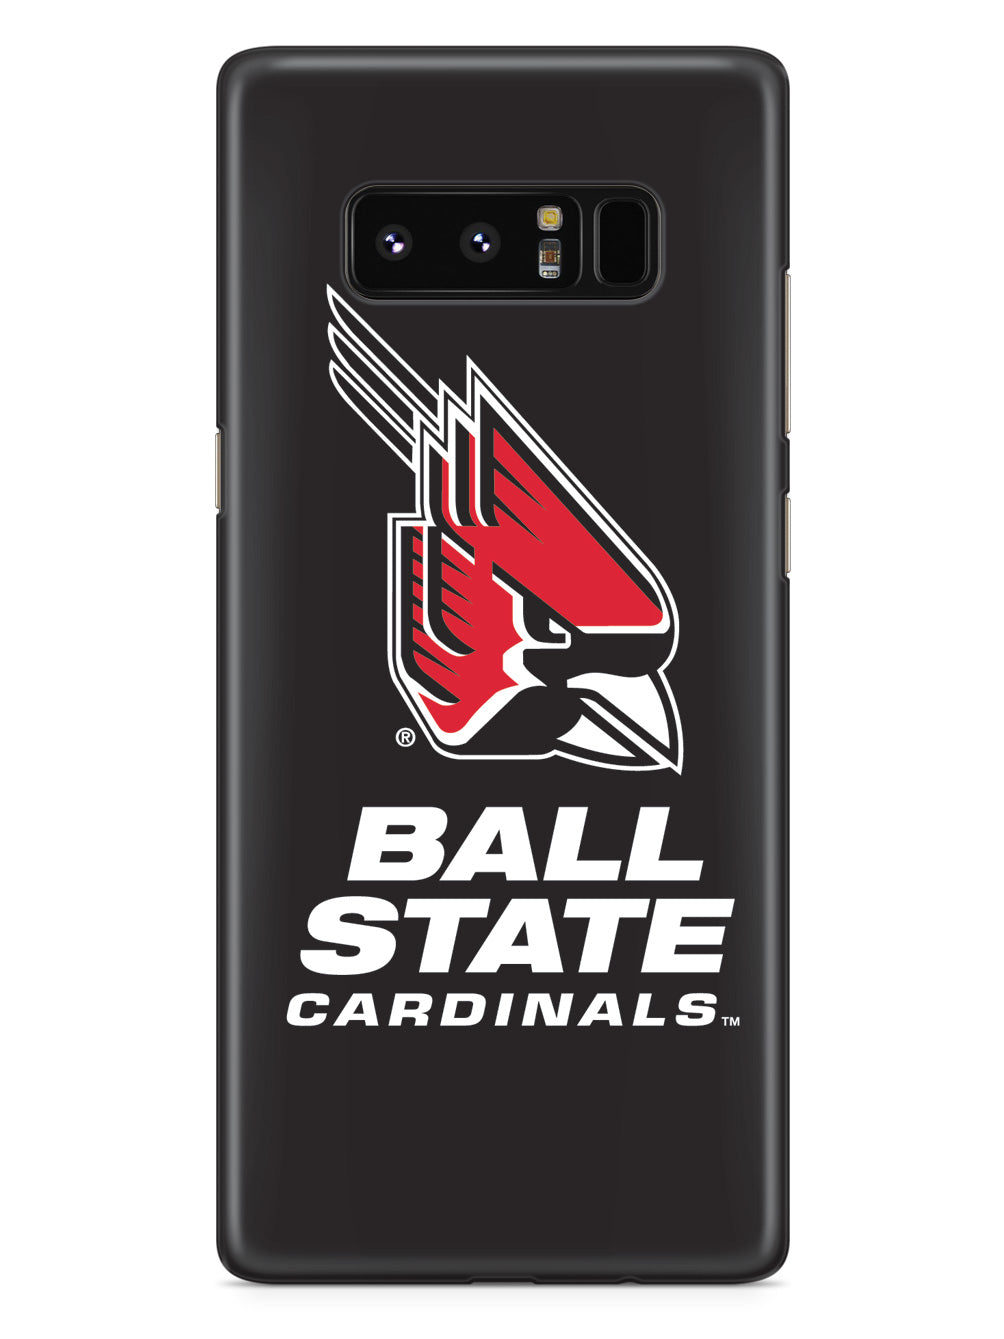 Ball State Cardinals Case